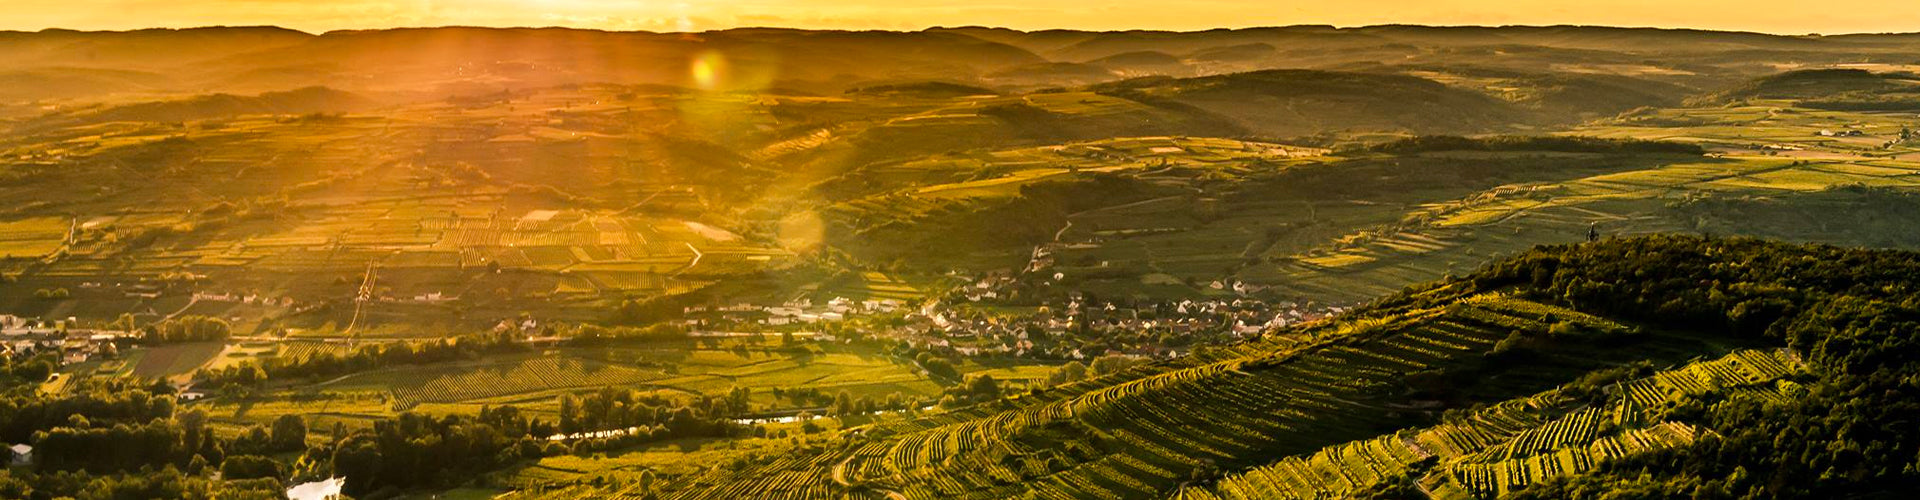 Weingut Bründlmayer vineyards in Kamptal, Austria